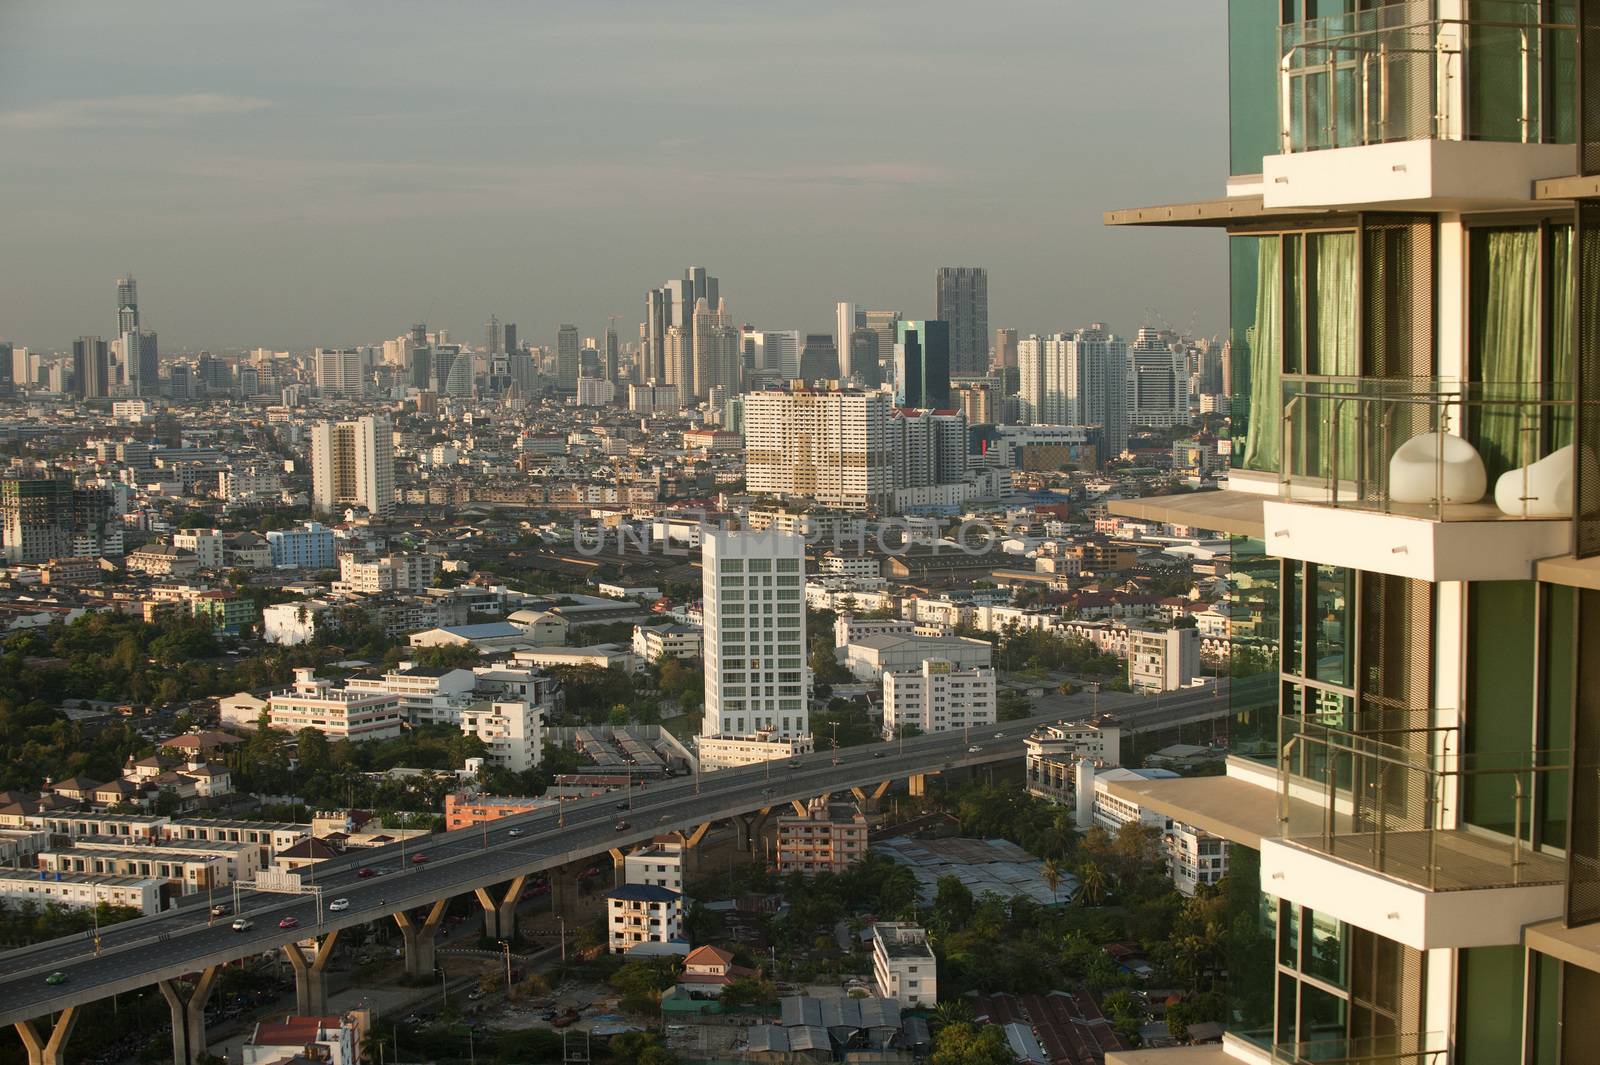 Bangkok skyline, Thailand. by think4photop